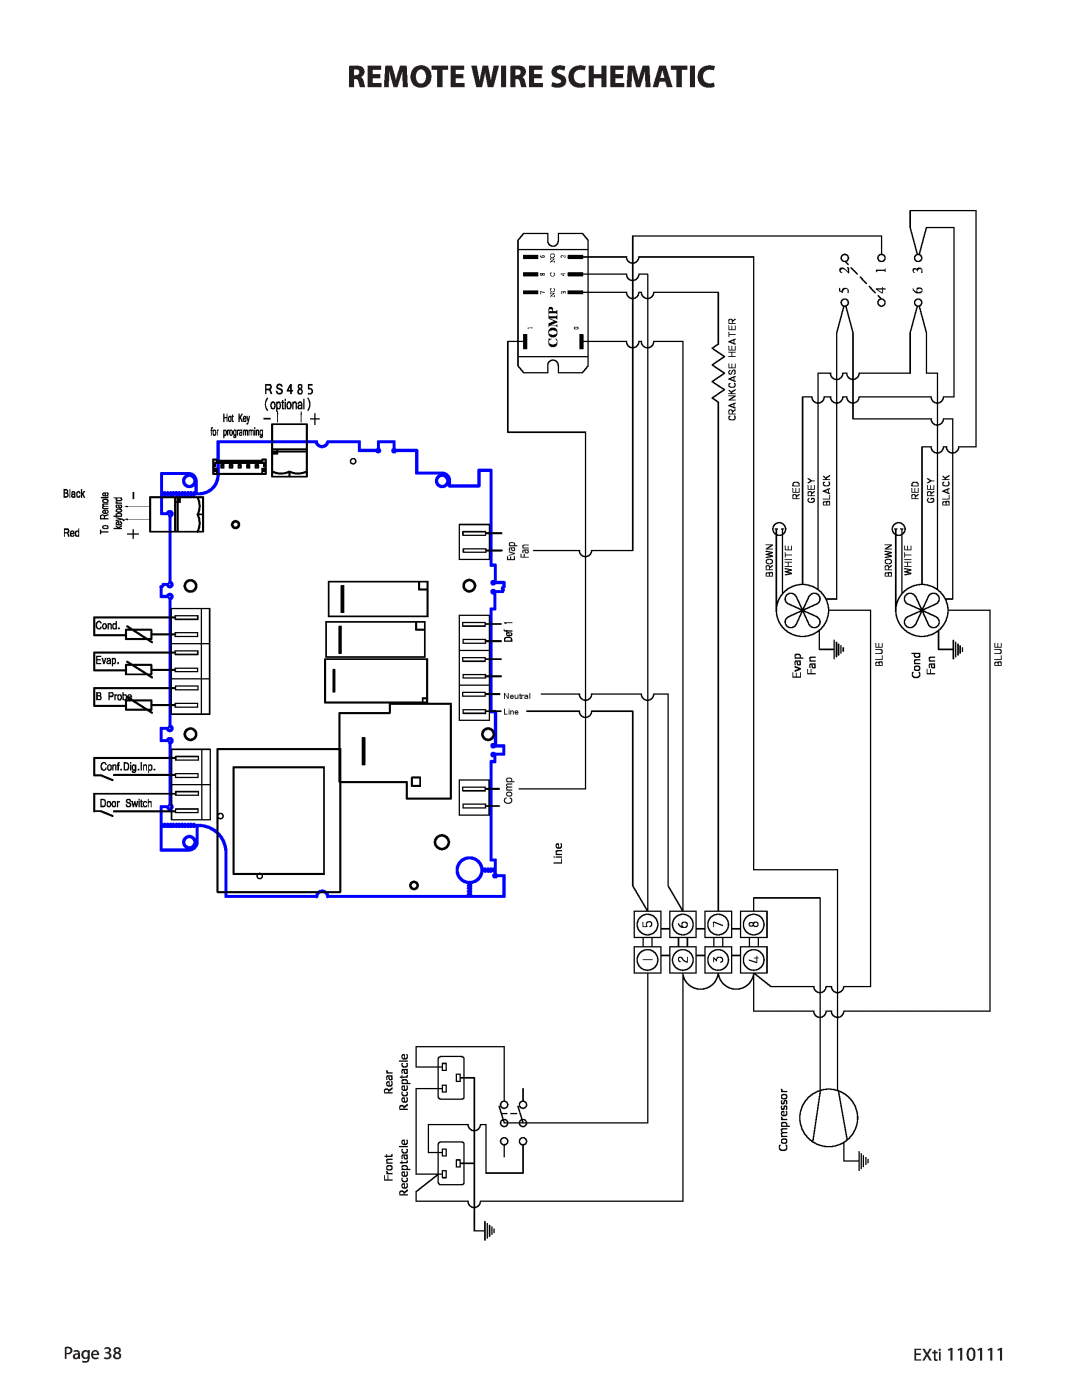 WhisperKool 5000 Remote Wire Schematic, , , , Receptacle, Line, Compressor, EXti, Front, Rear, Evap 